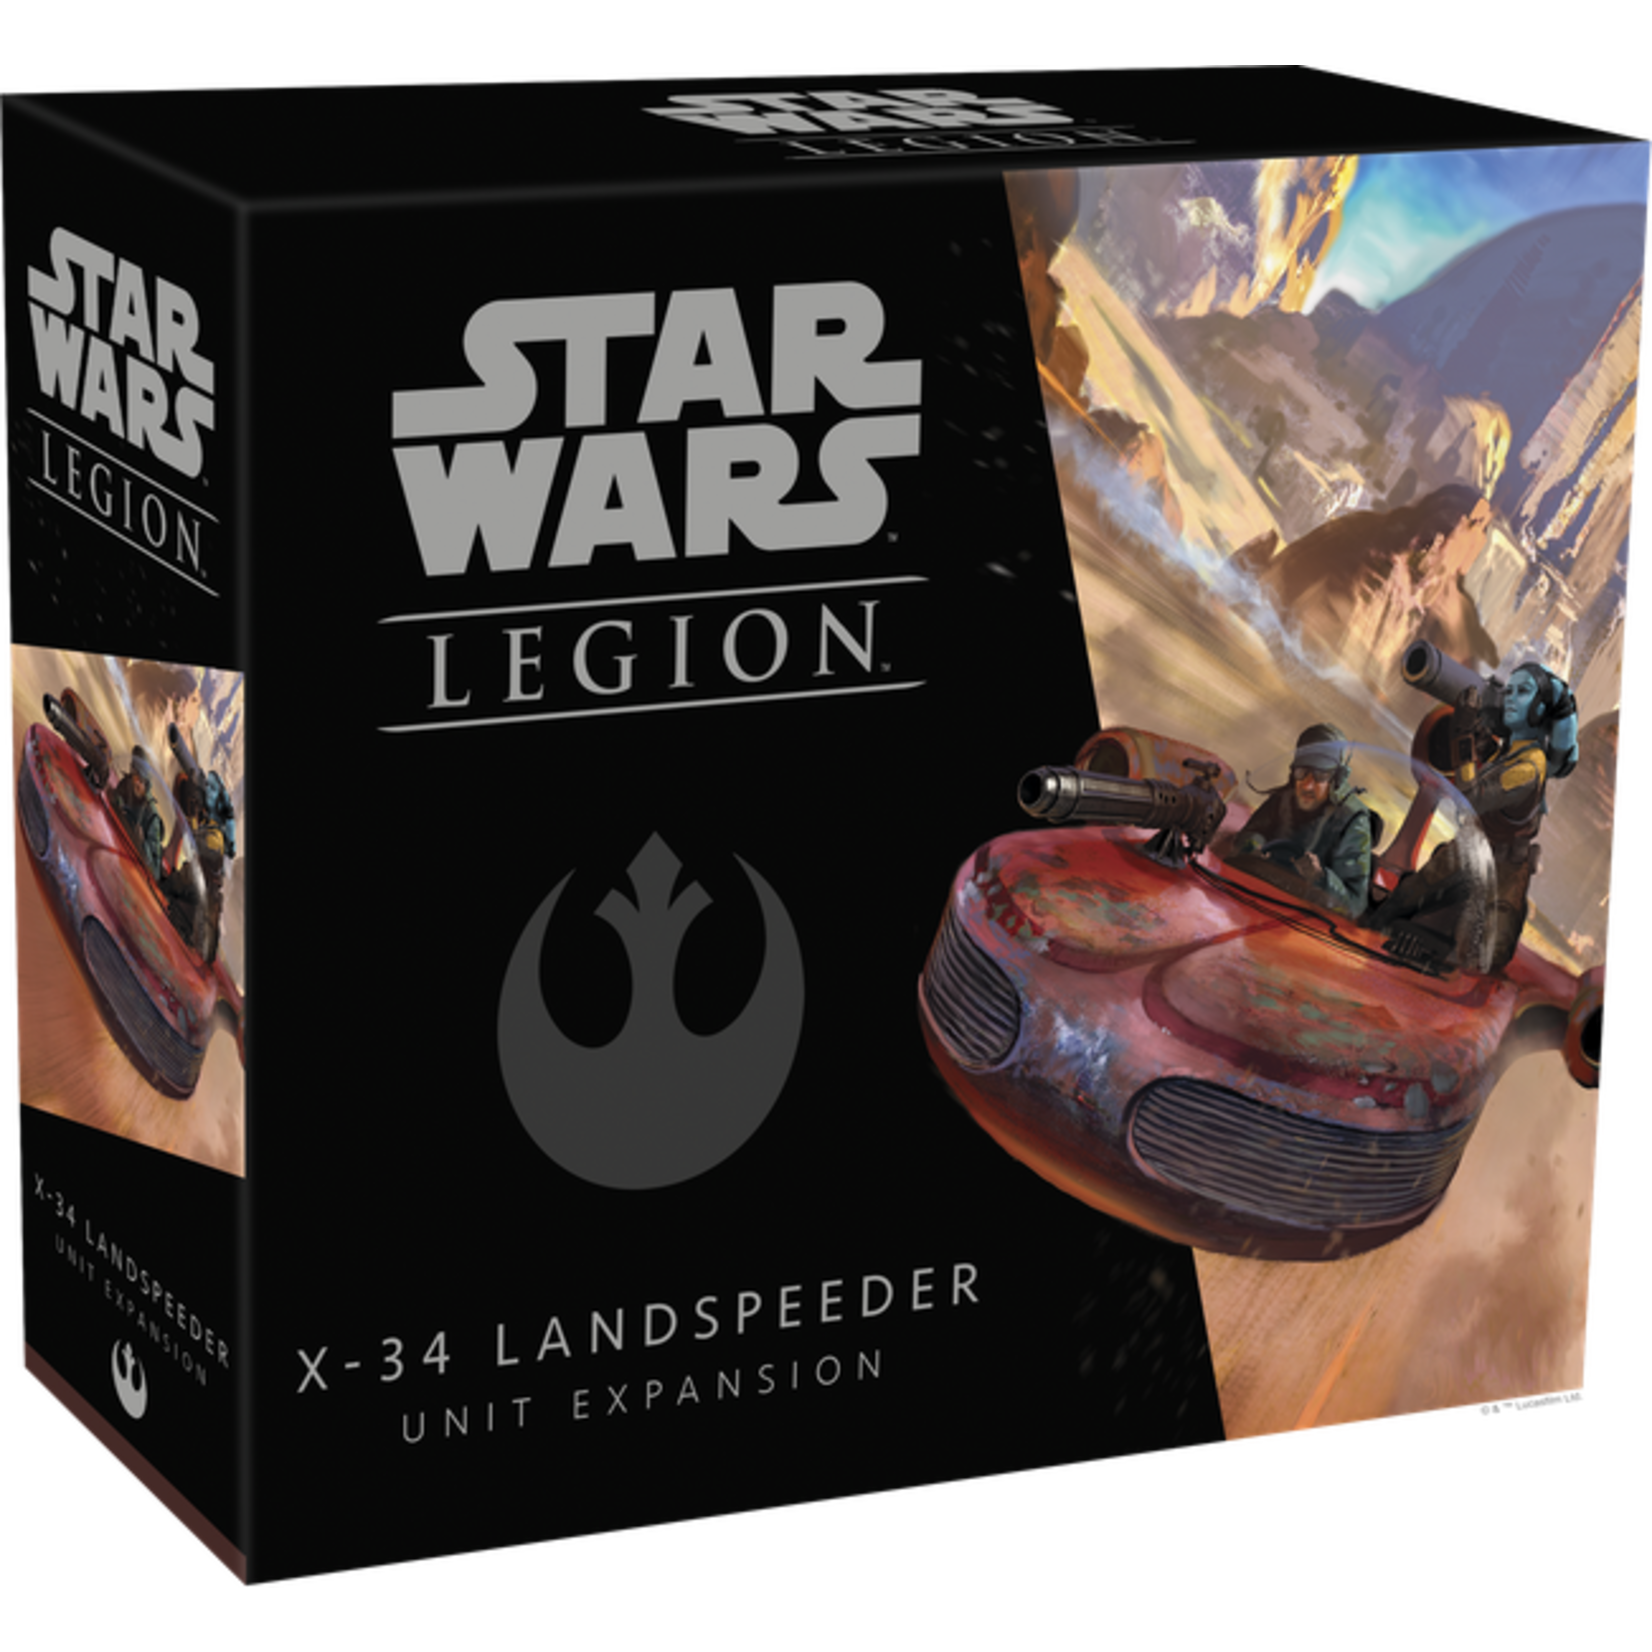 Star wars: Legion X-34 Landspeeder Unit Expansion